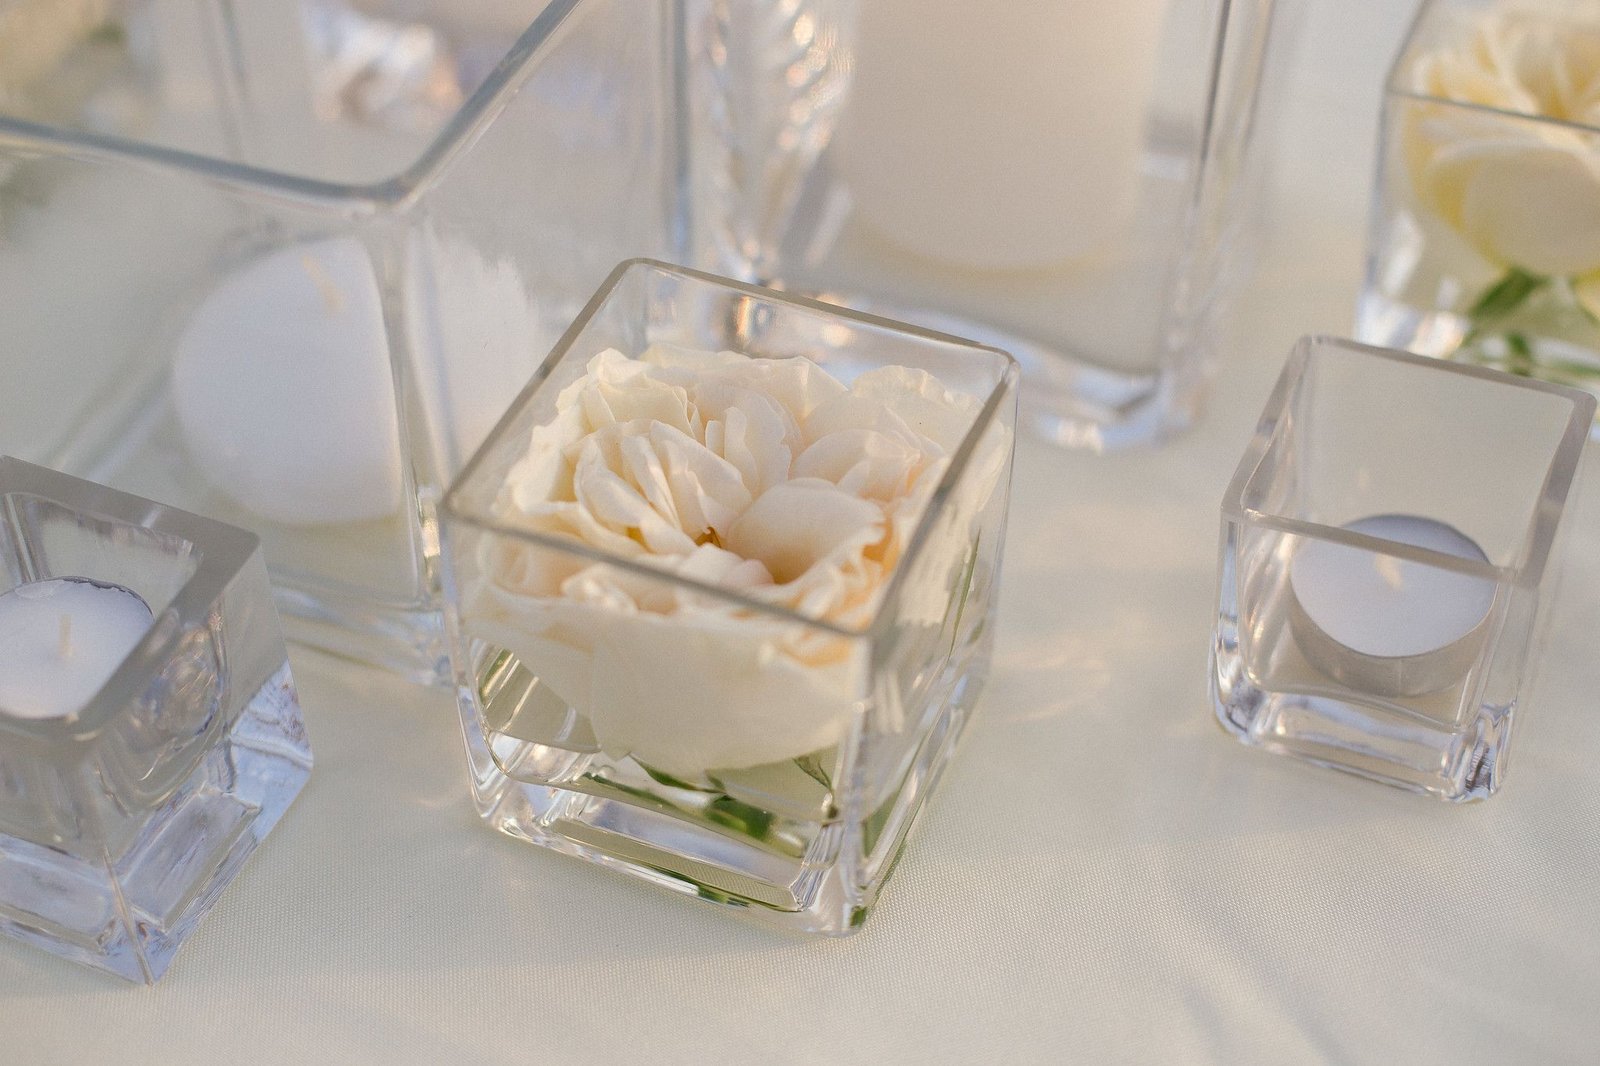 Garden Rose in small vase at wedding venue Sunset da Mona Lisa. Wedding Design by Cabo Wedding Services.